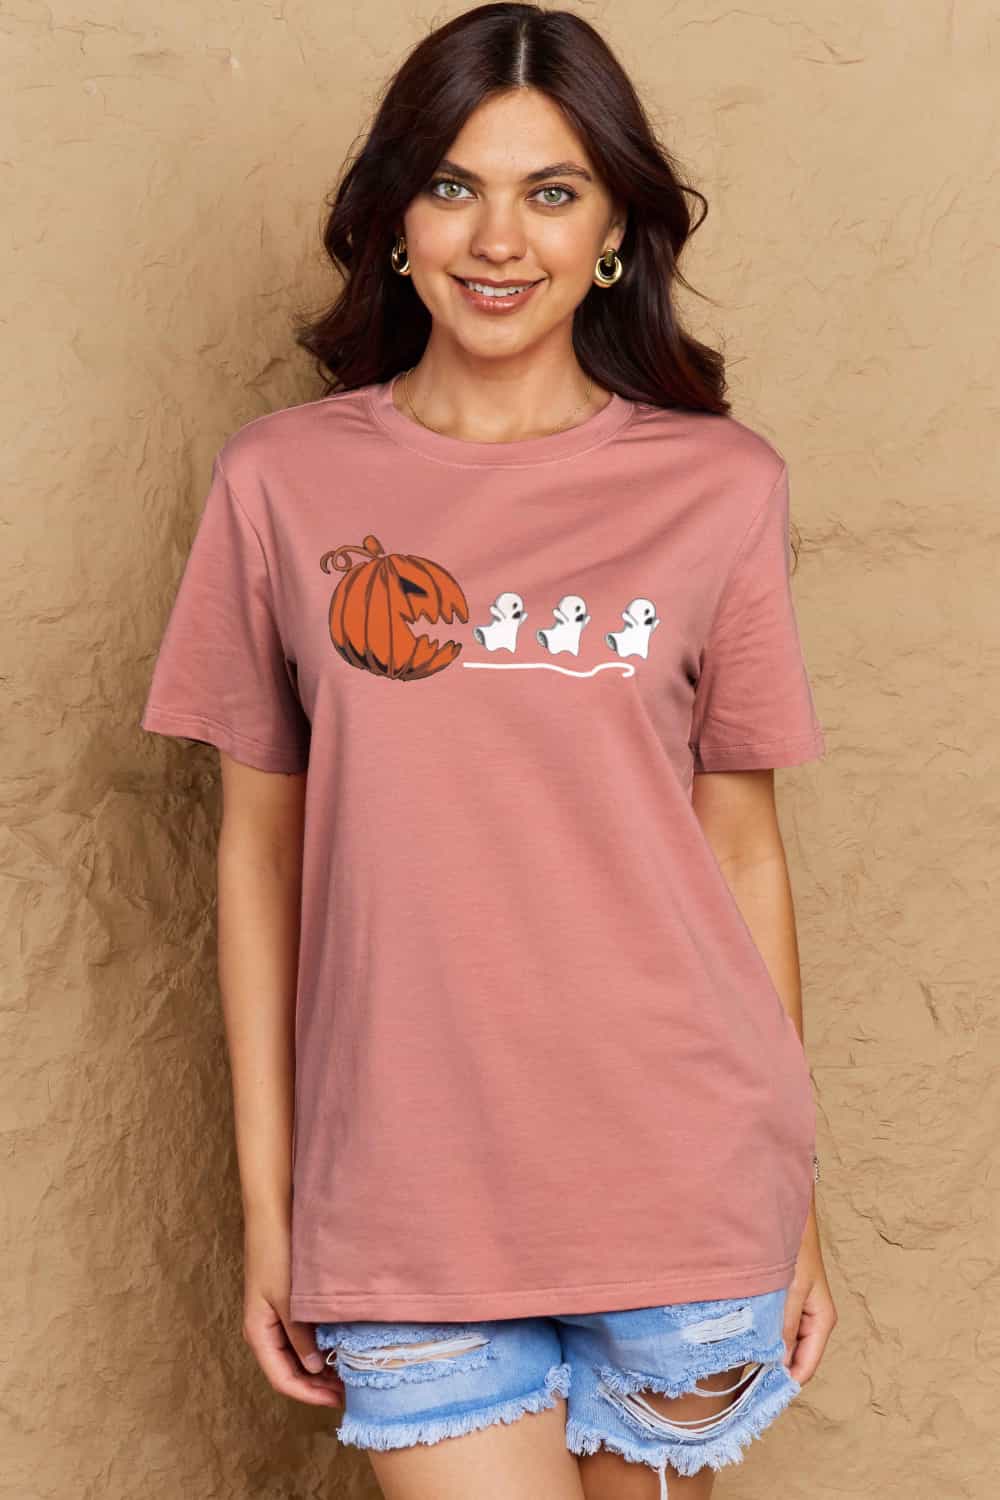 Full Size Jack-O’-Lantern Graphic Cotton T-Shirt - Pink / S - T-Shirts - Shirts & Tops - 7 - 2024